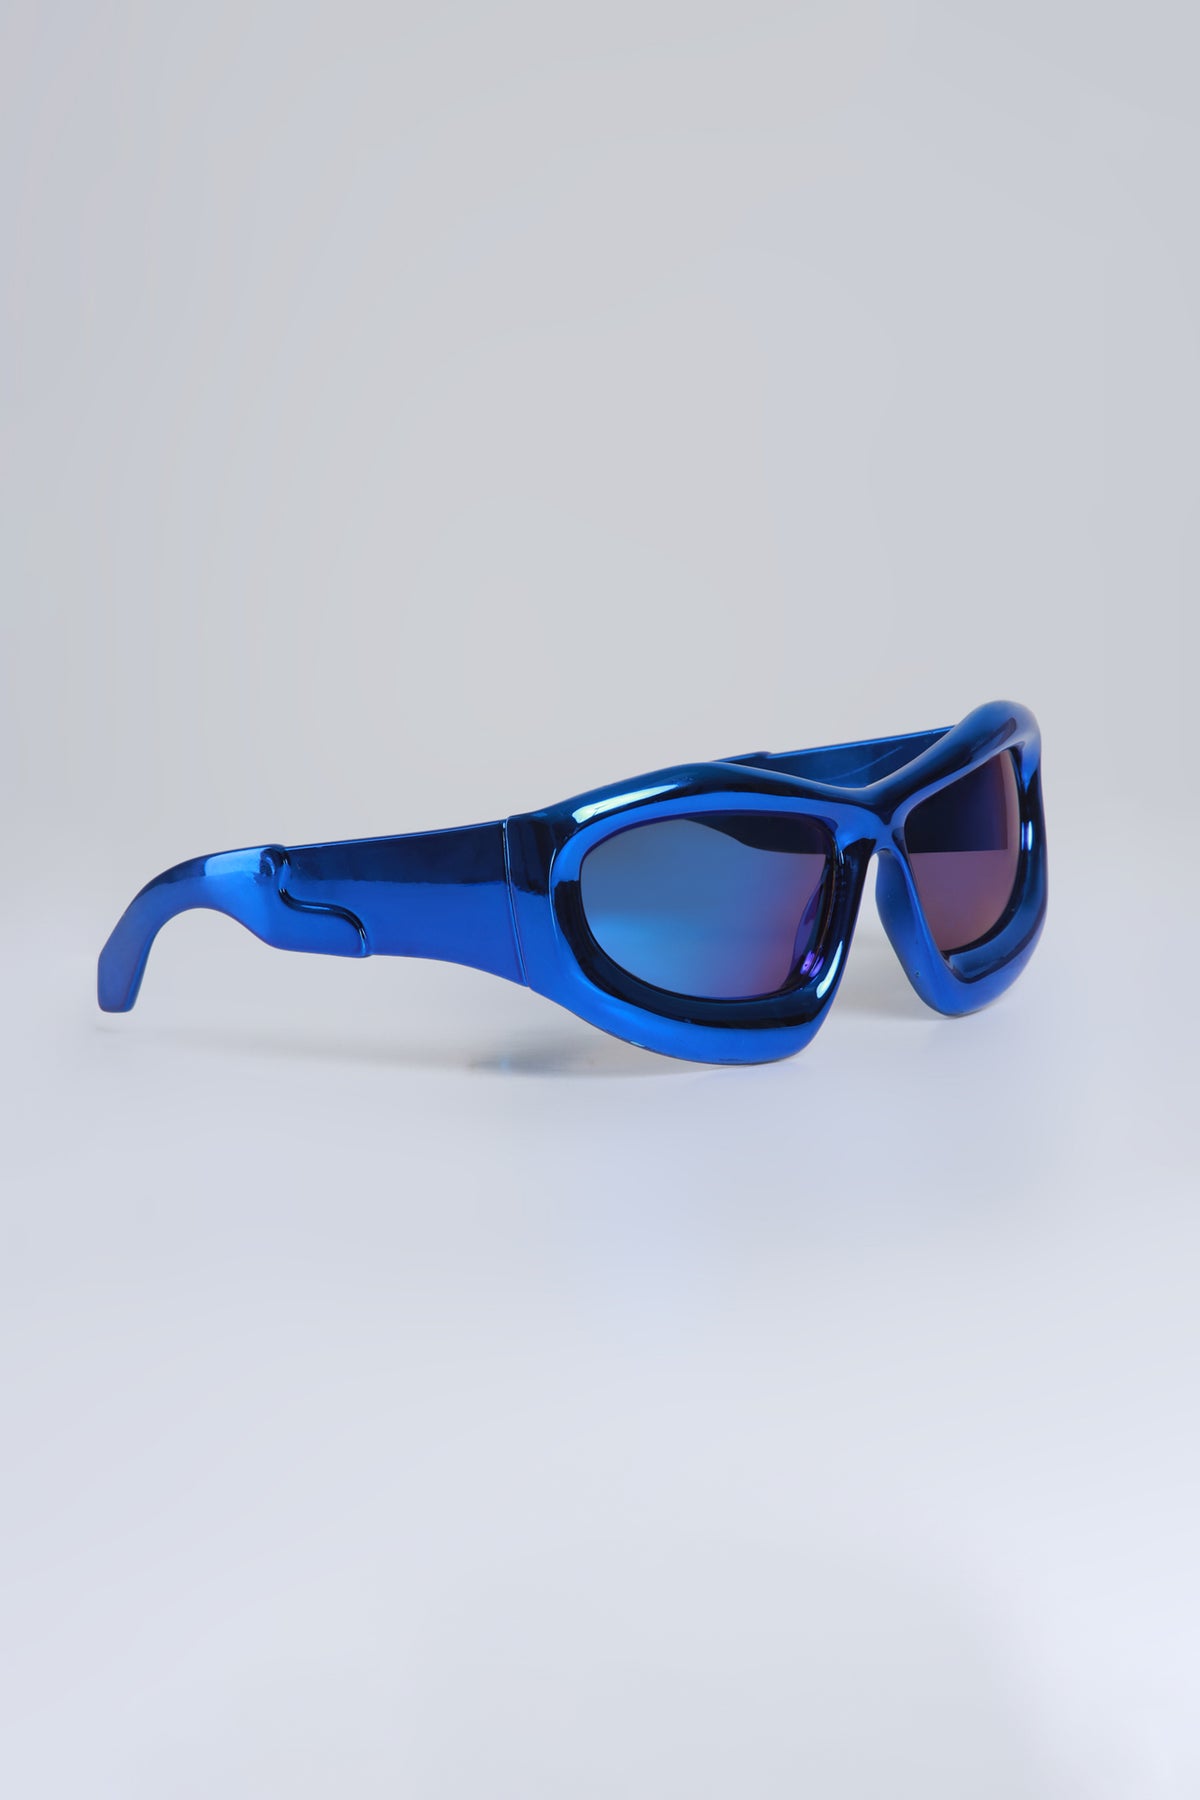 
              On Sight Oversized Bubble Sunglasses - Royal Blue - Swank A Posh
            